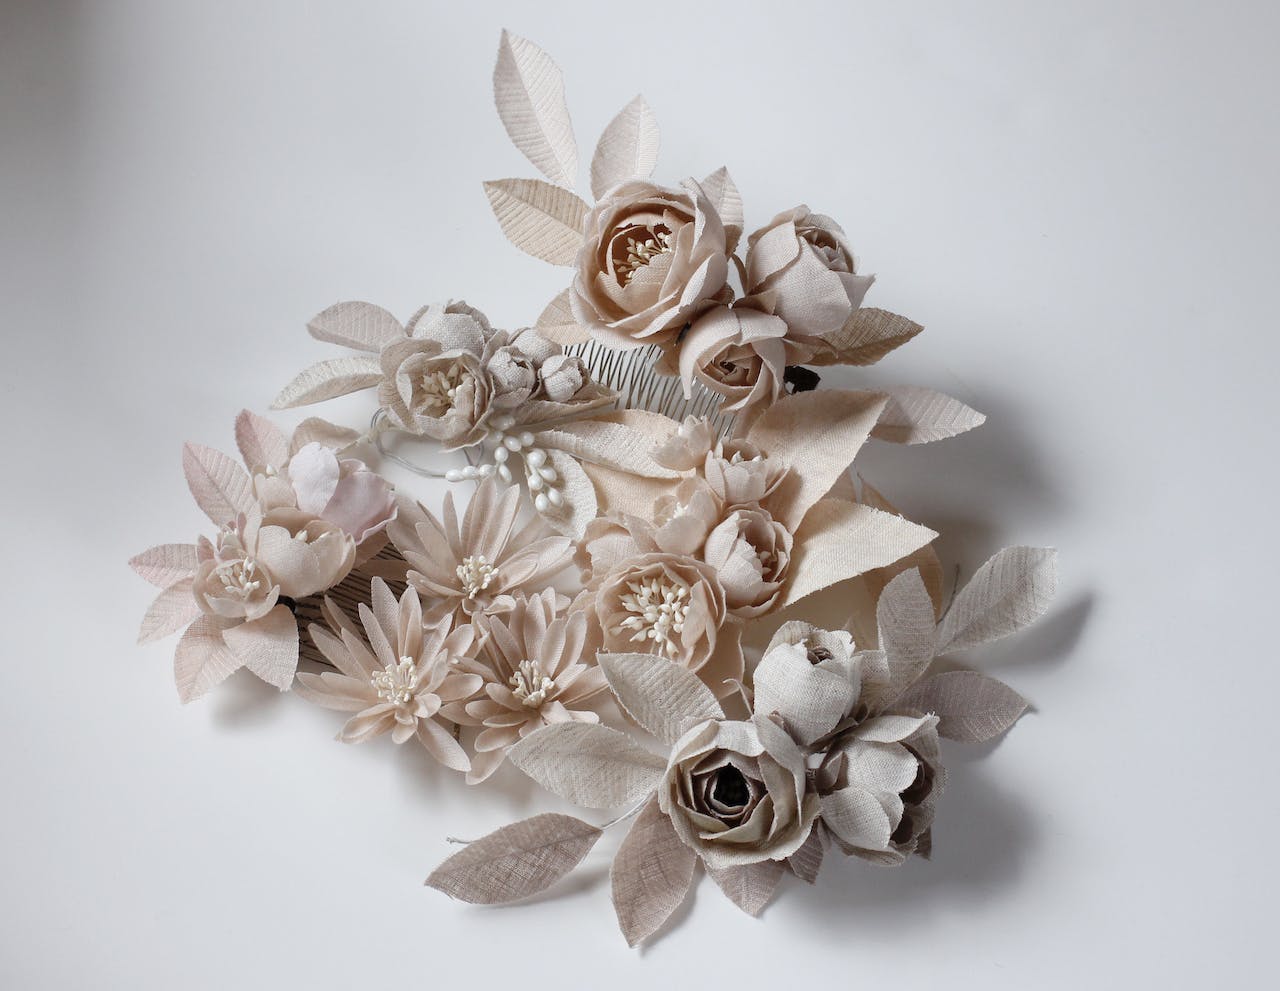 Artisan paper flowers made by Bianca Harrington